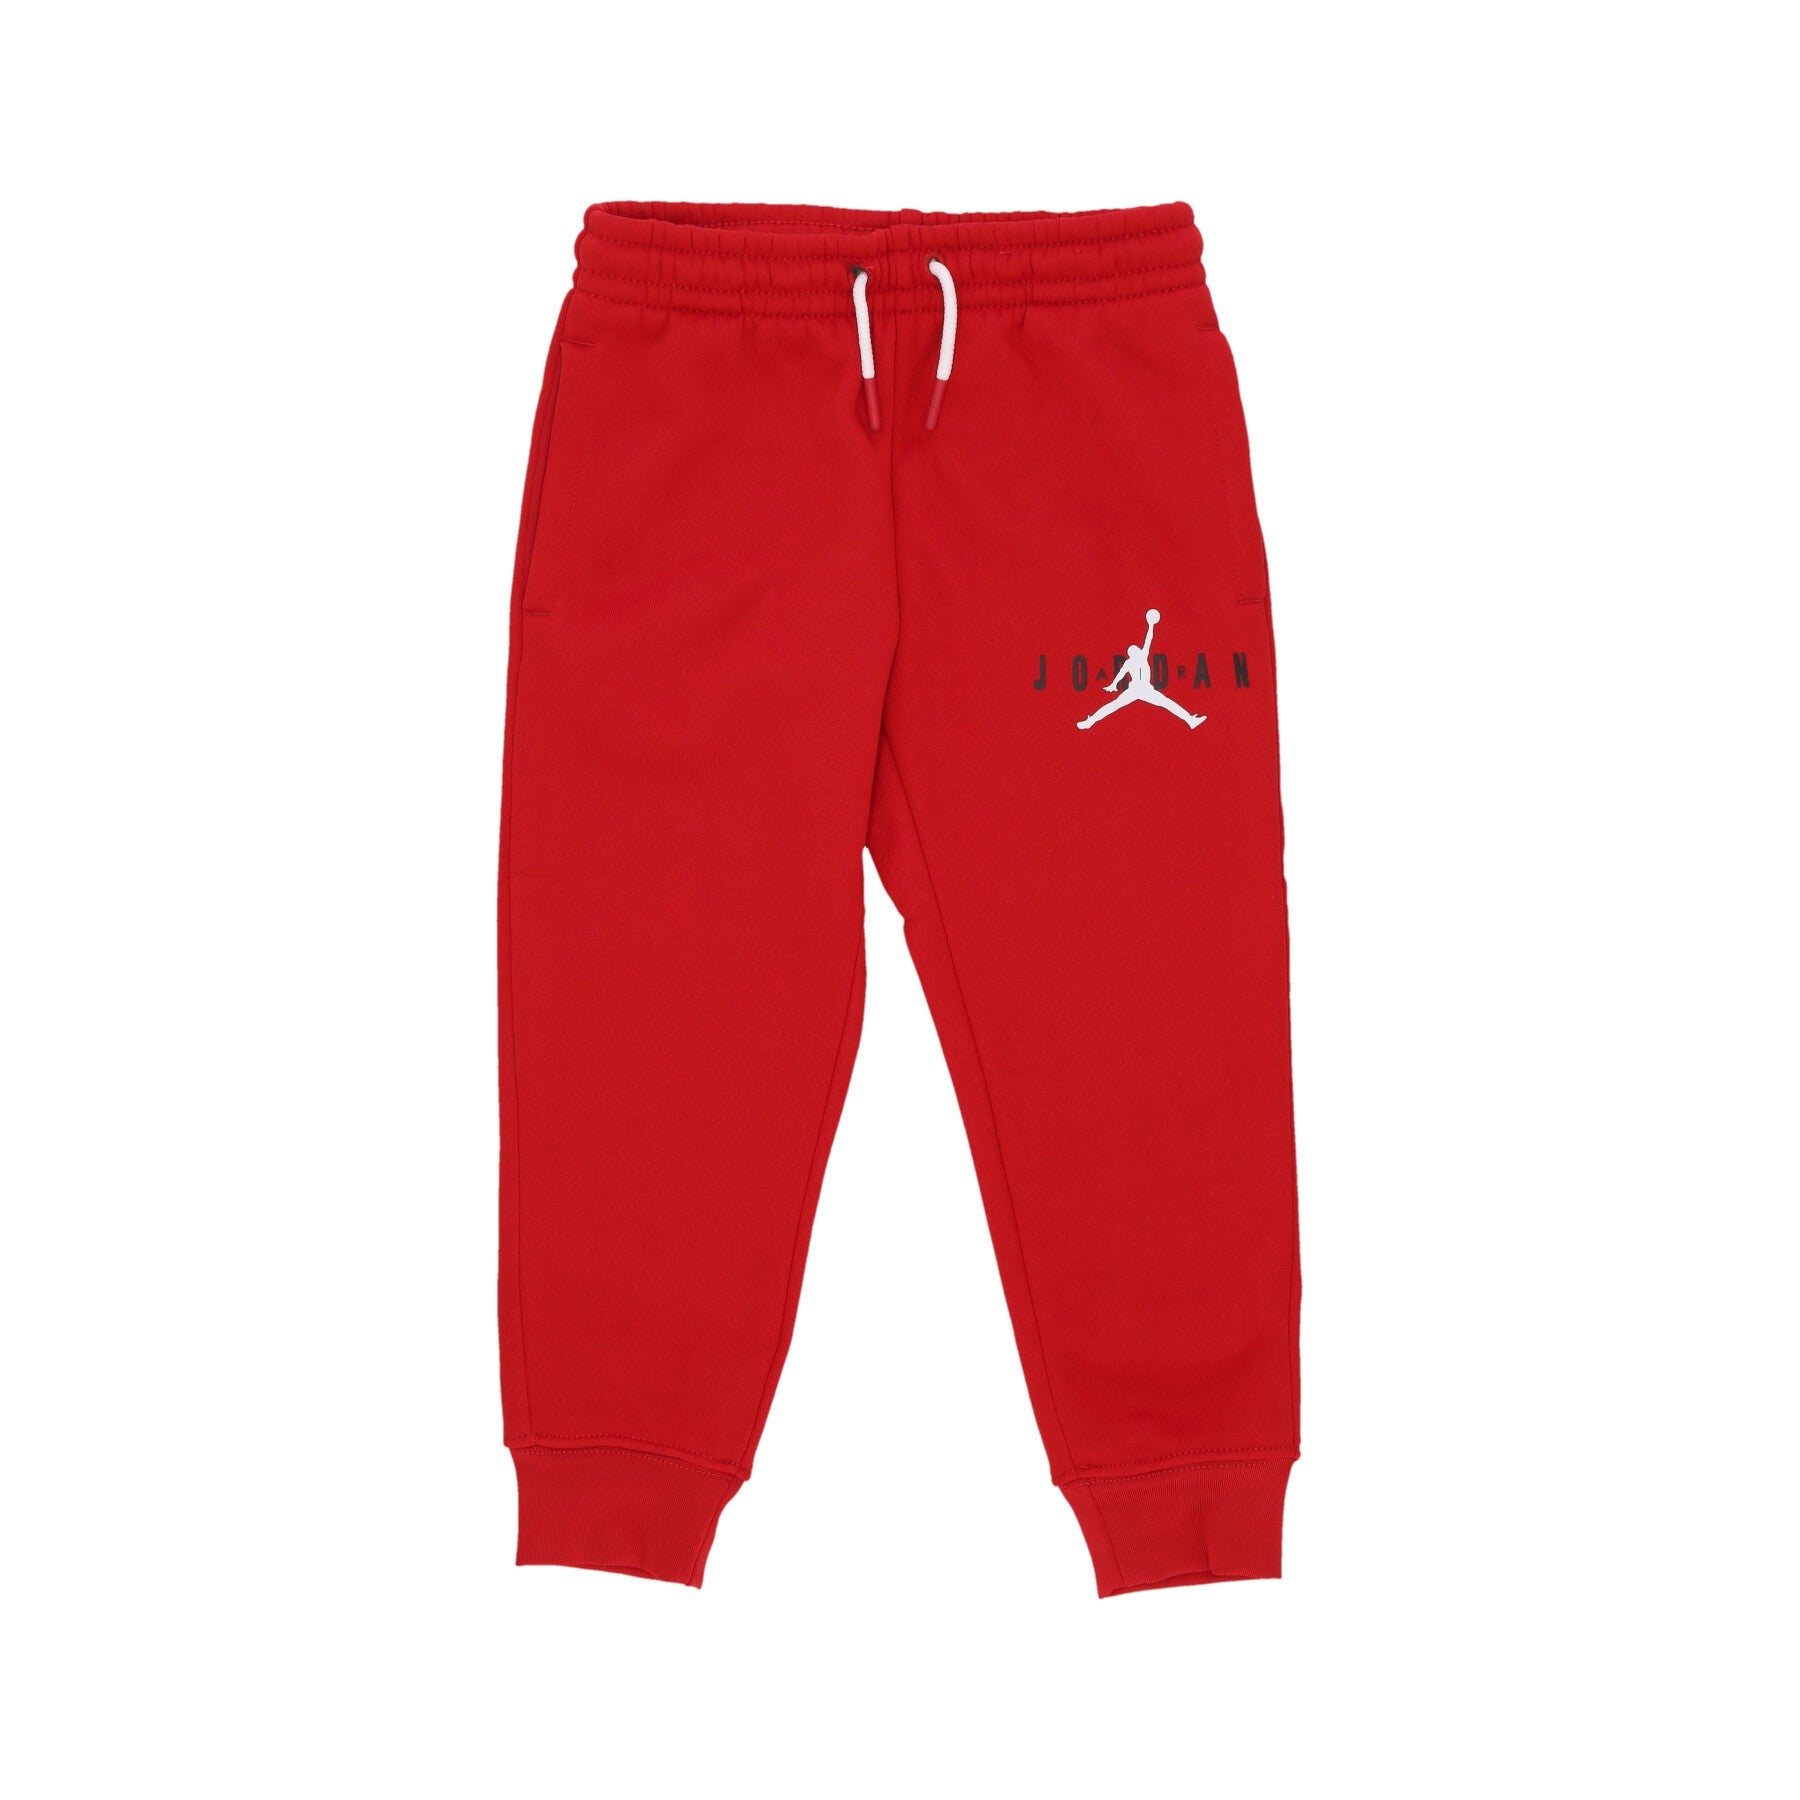 Jordan, Pantalone Tuta Felpato Bambino Jumpman Sustainable Pant, Gym Red